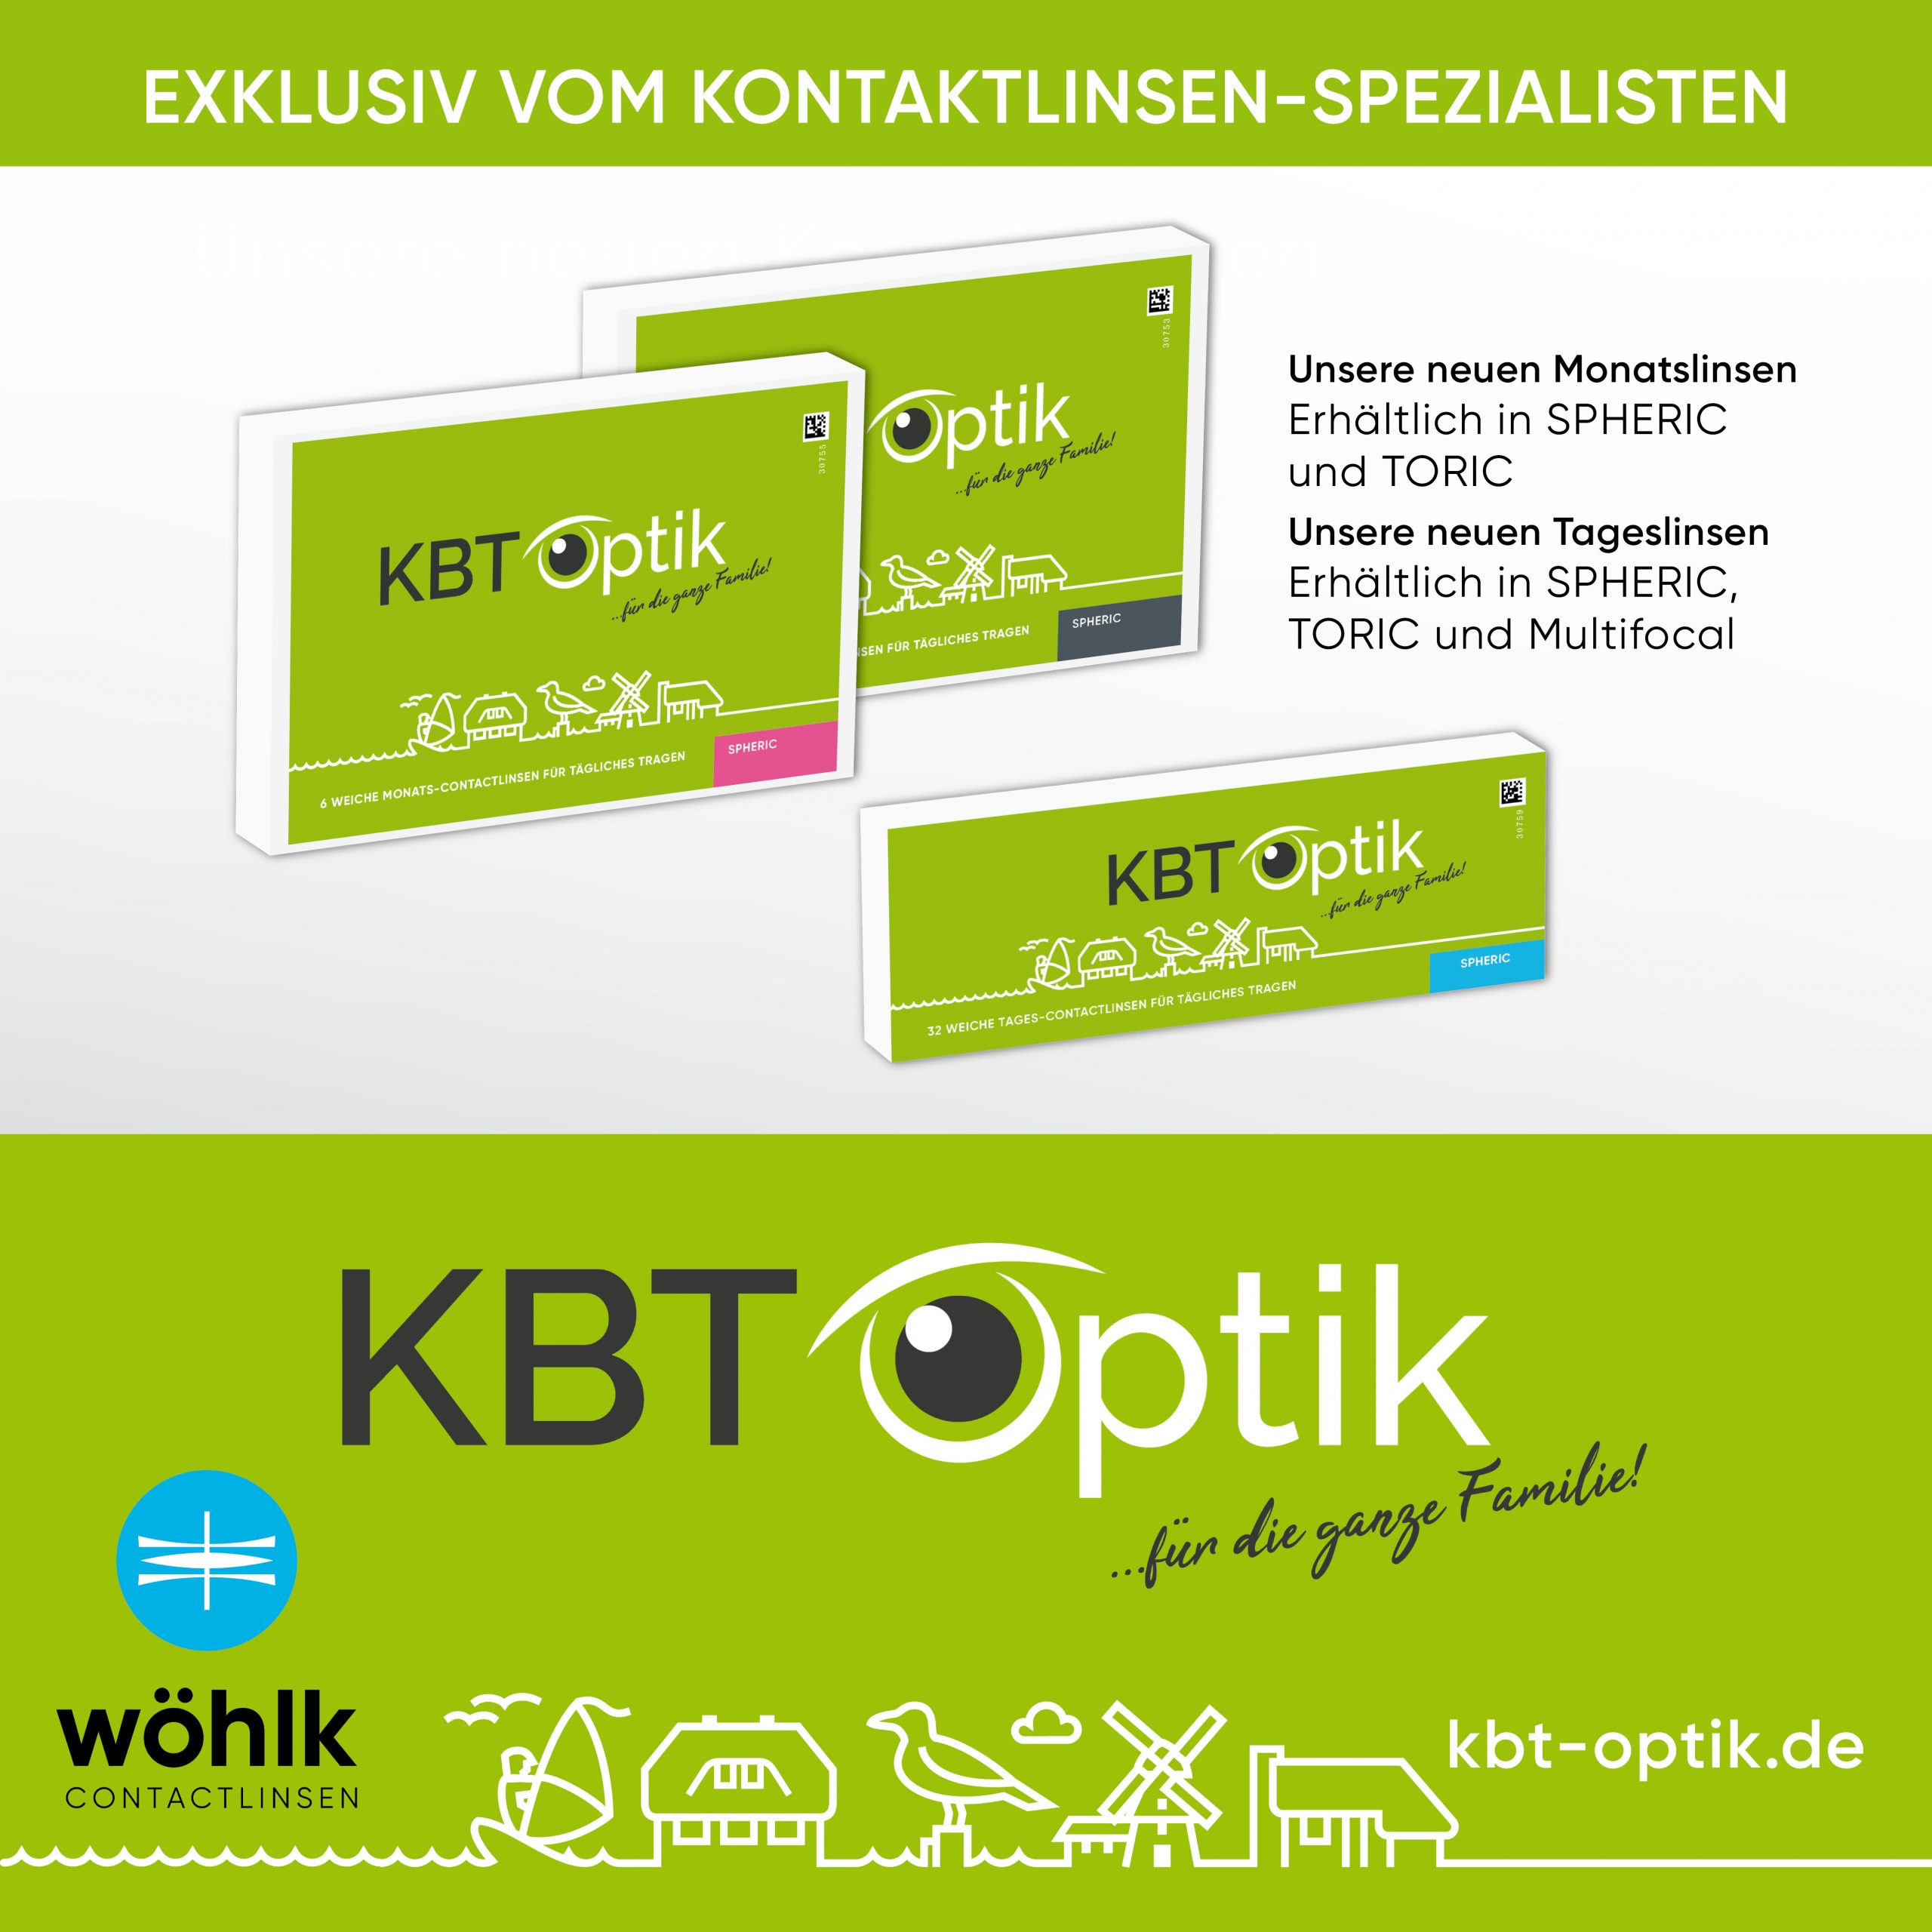 KBT Optik Kontaktlinsen Eigenmarke 01